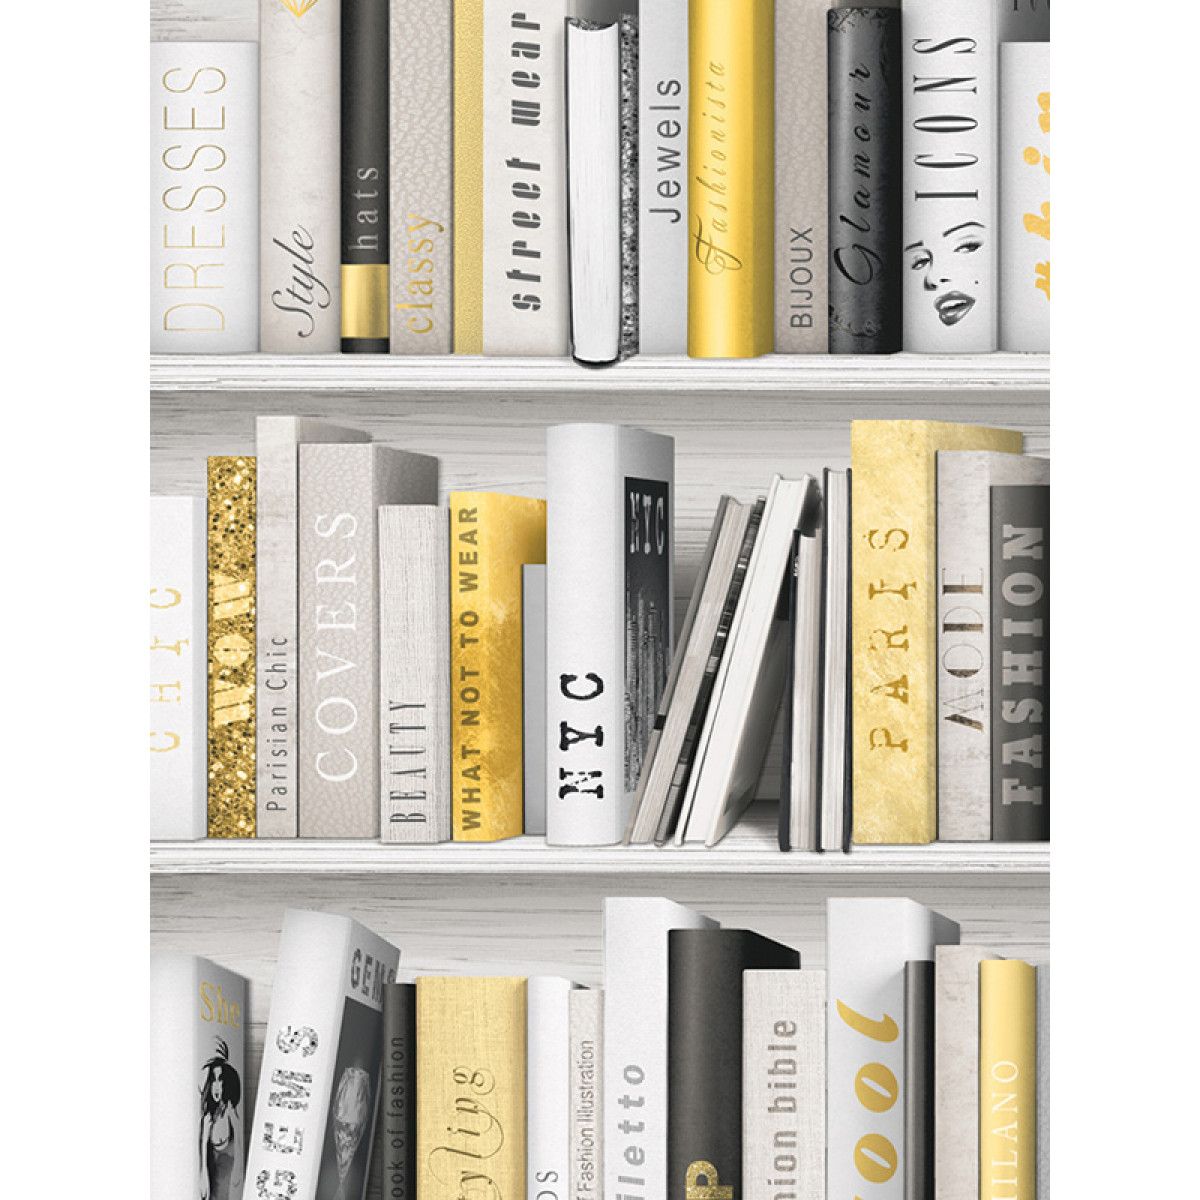 Black And White Books On Shelf - HD Wallpaper 